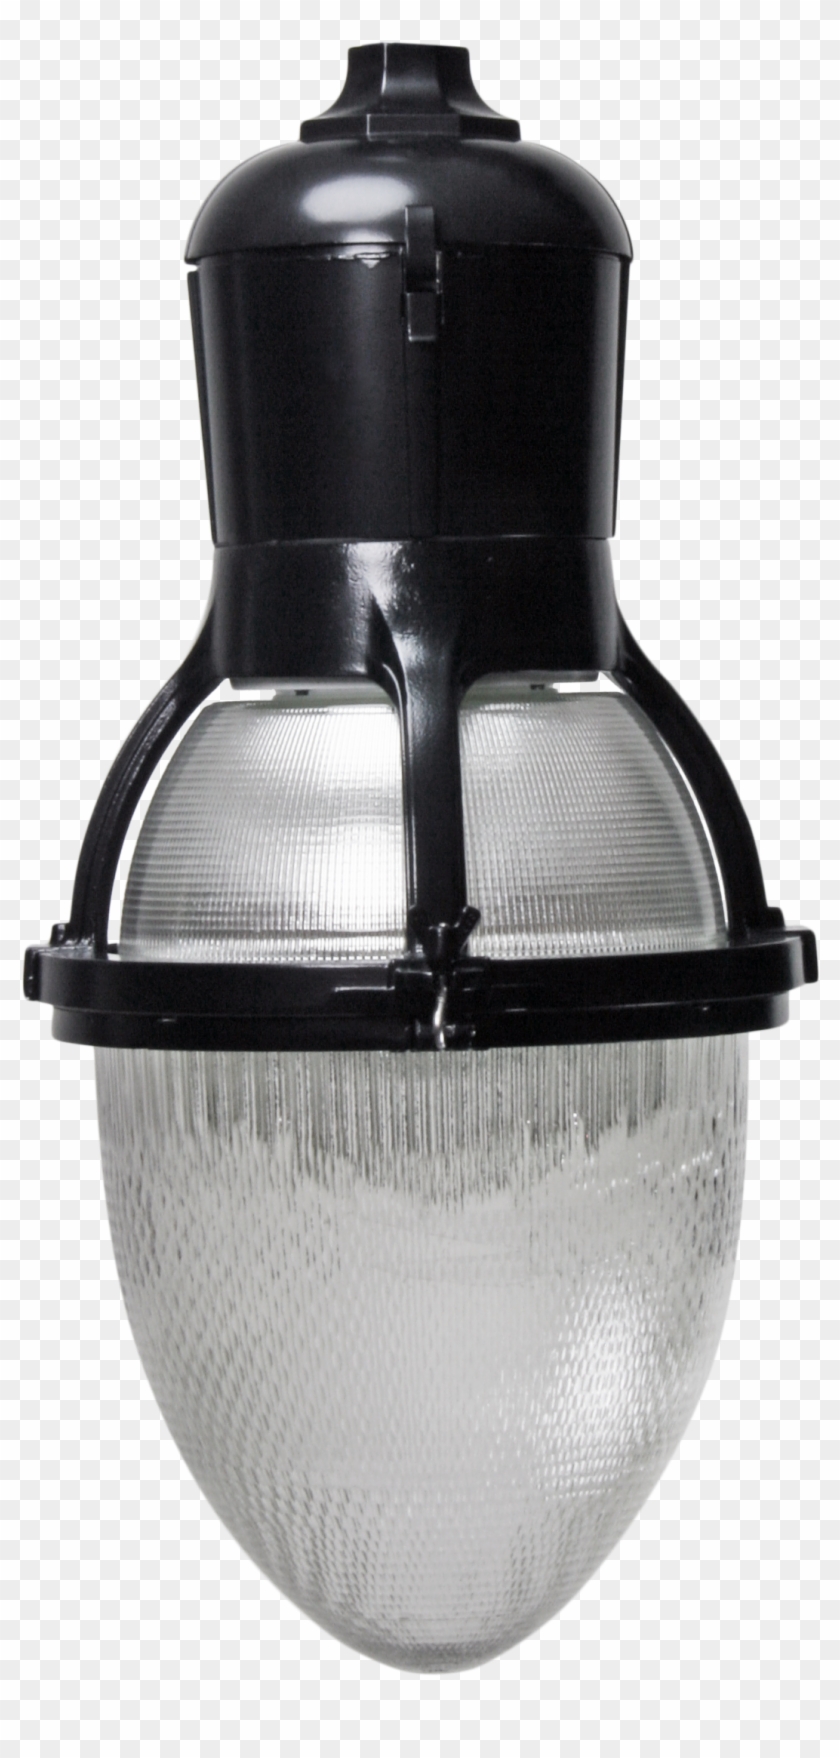 Memphis Tear Uplight - Small Appliance Clipart #2994514